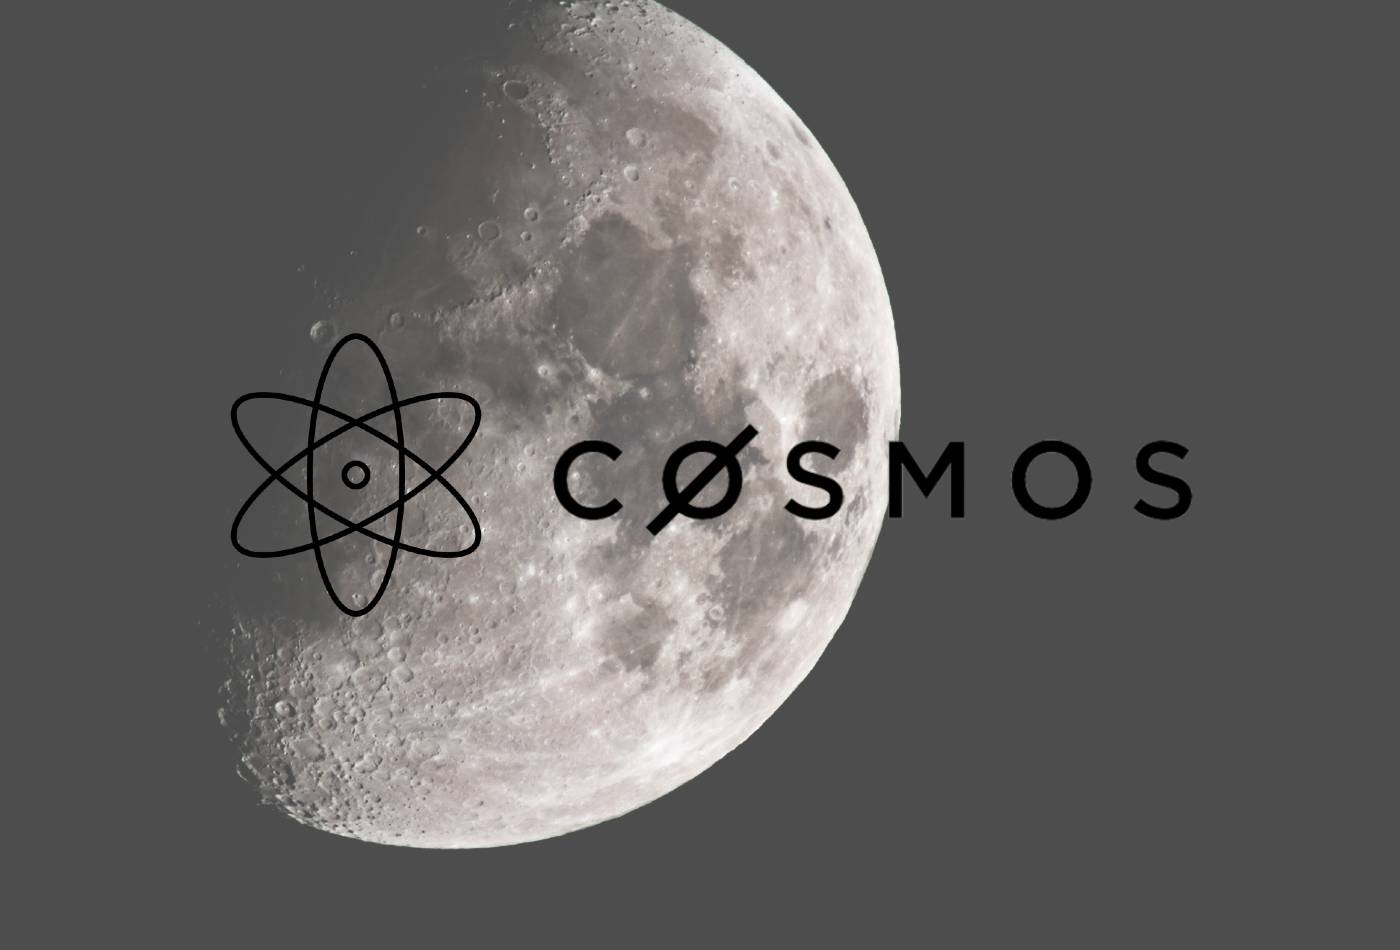 Cosmos (ATOM) Price Prediction 2022-2030: Expert Analysis & More